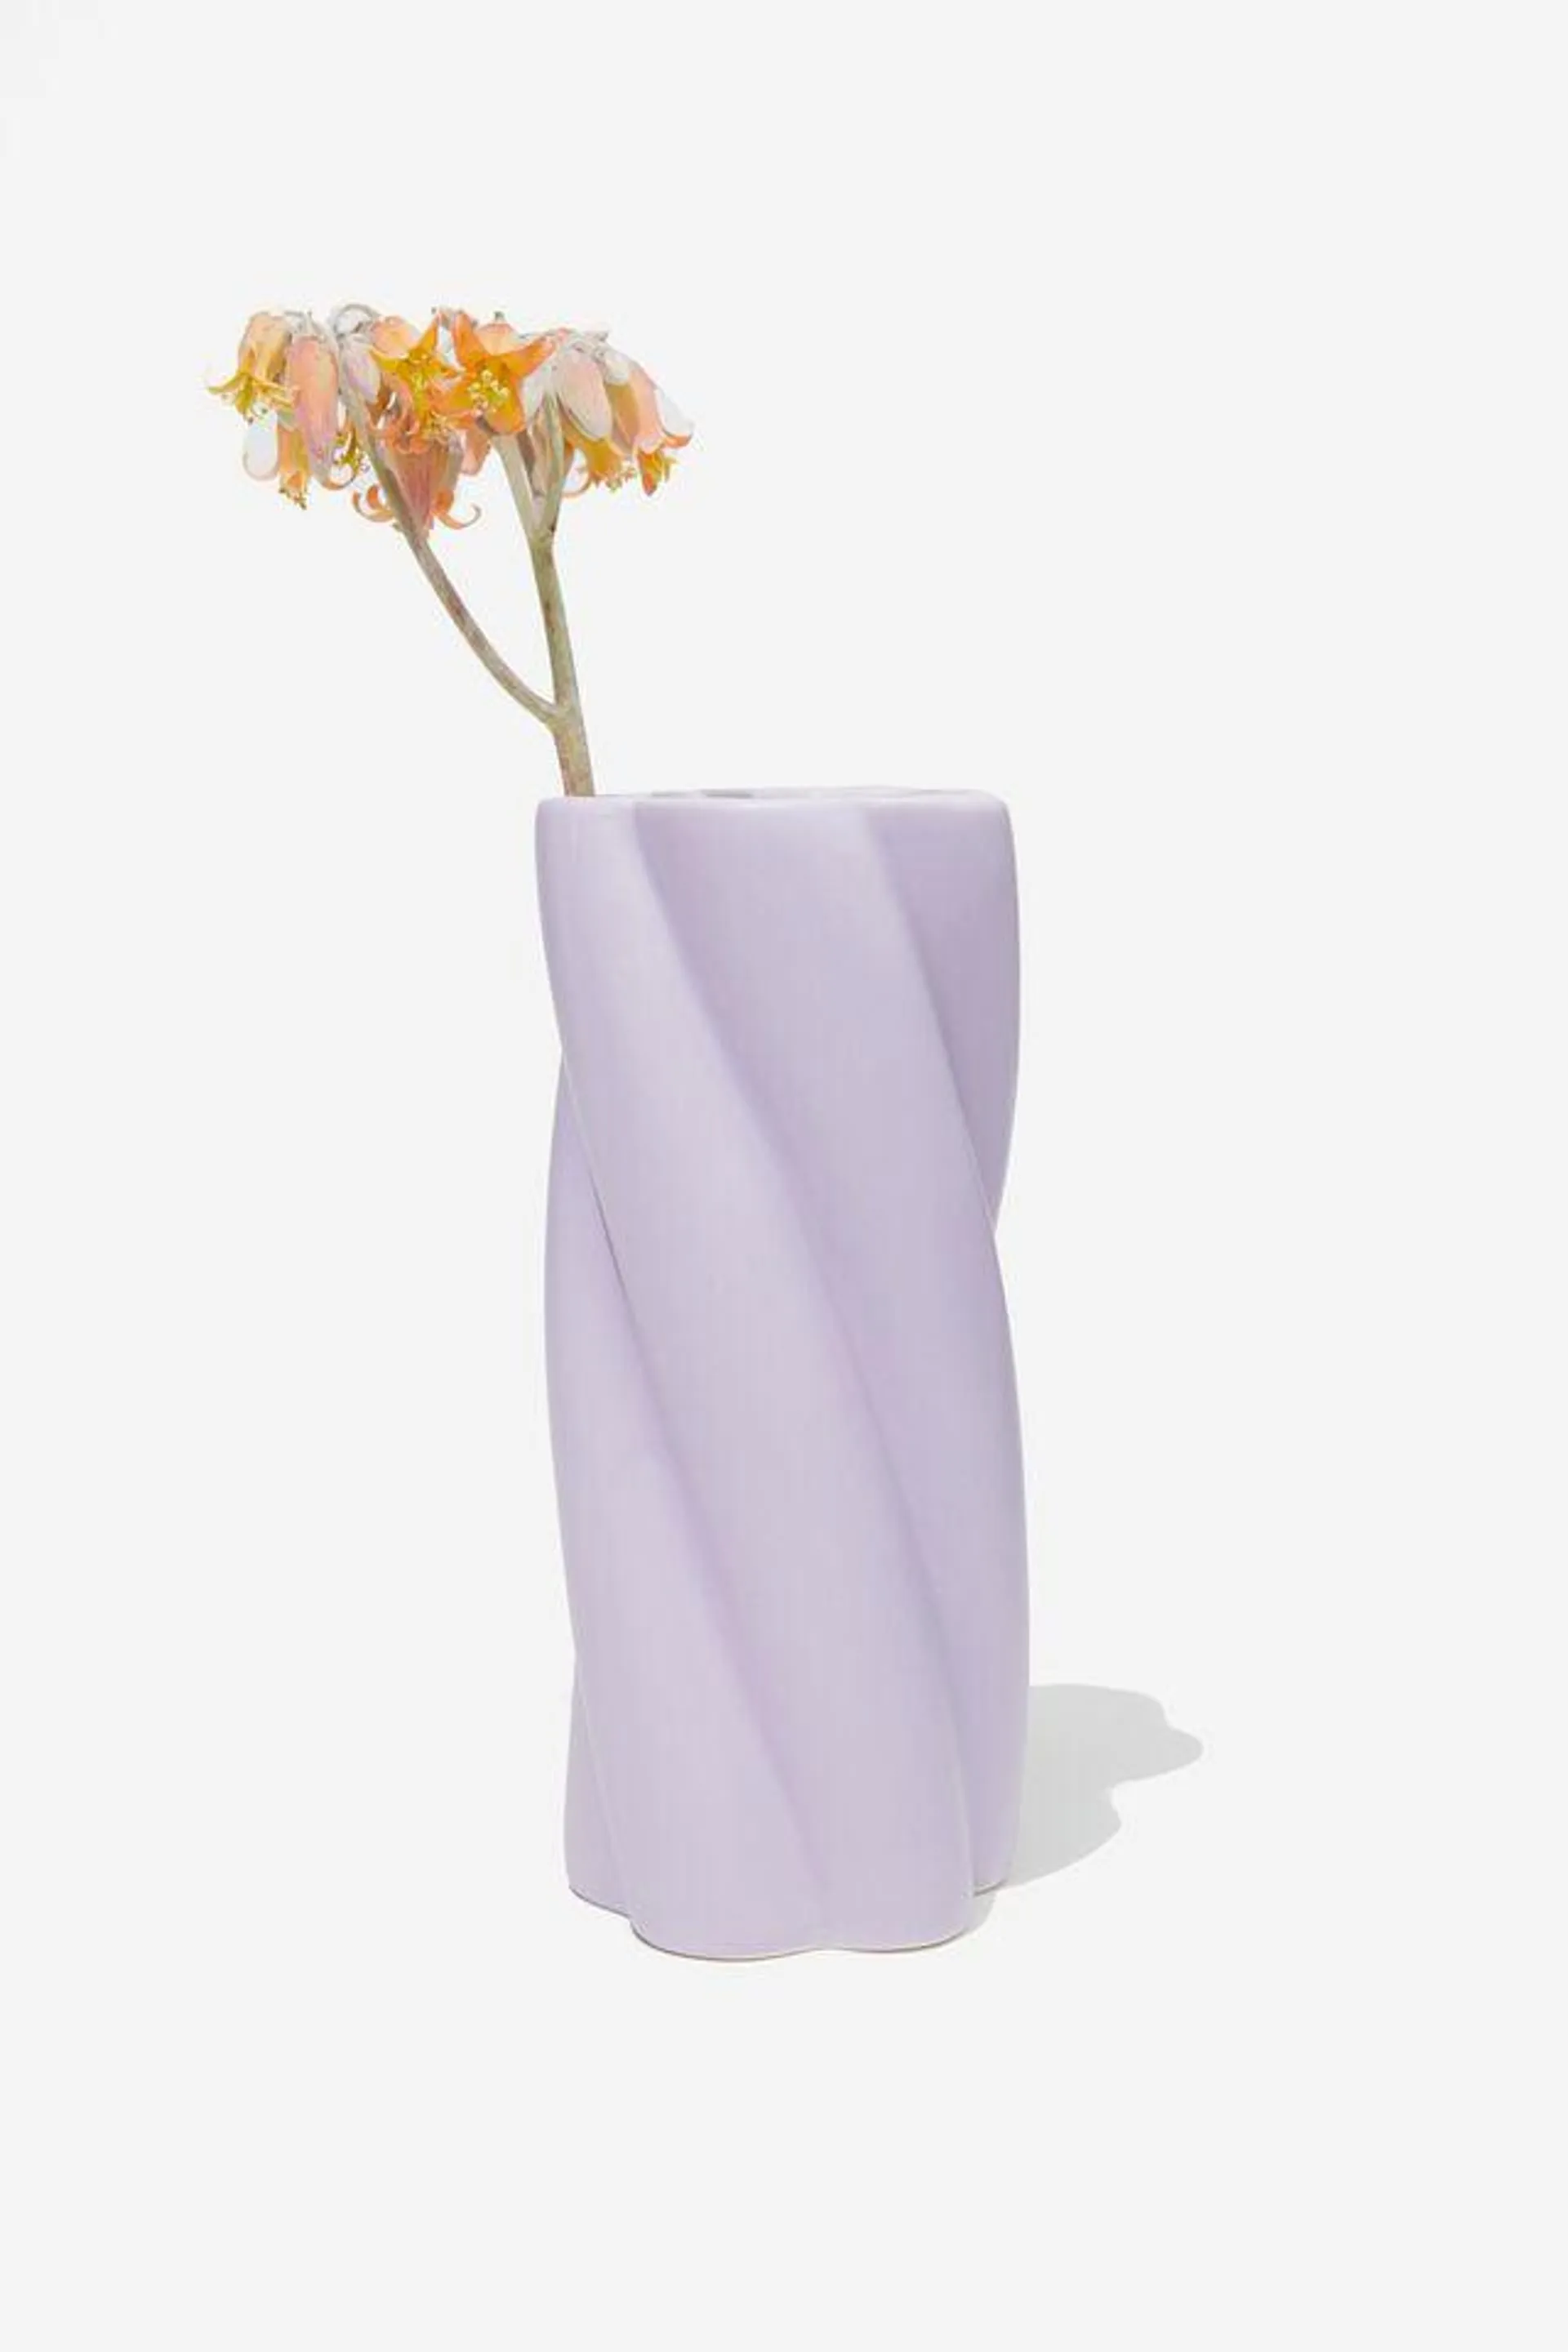 Mystic Minded Vase